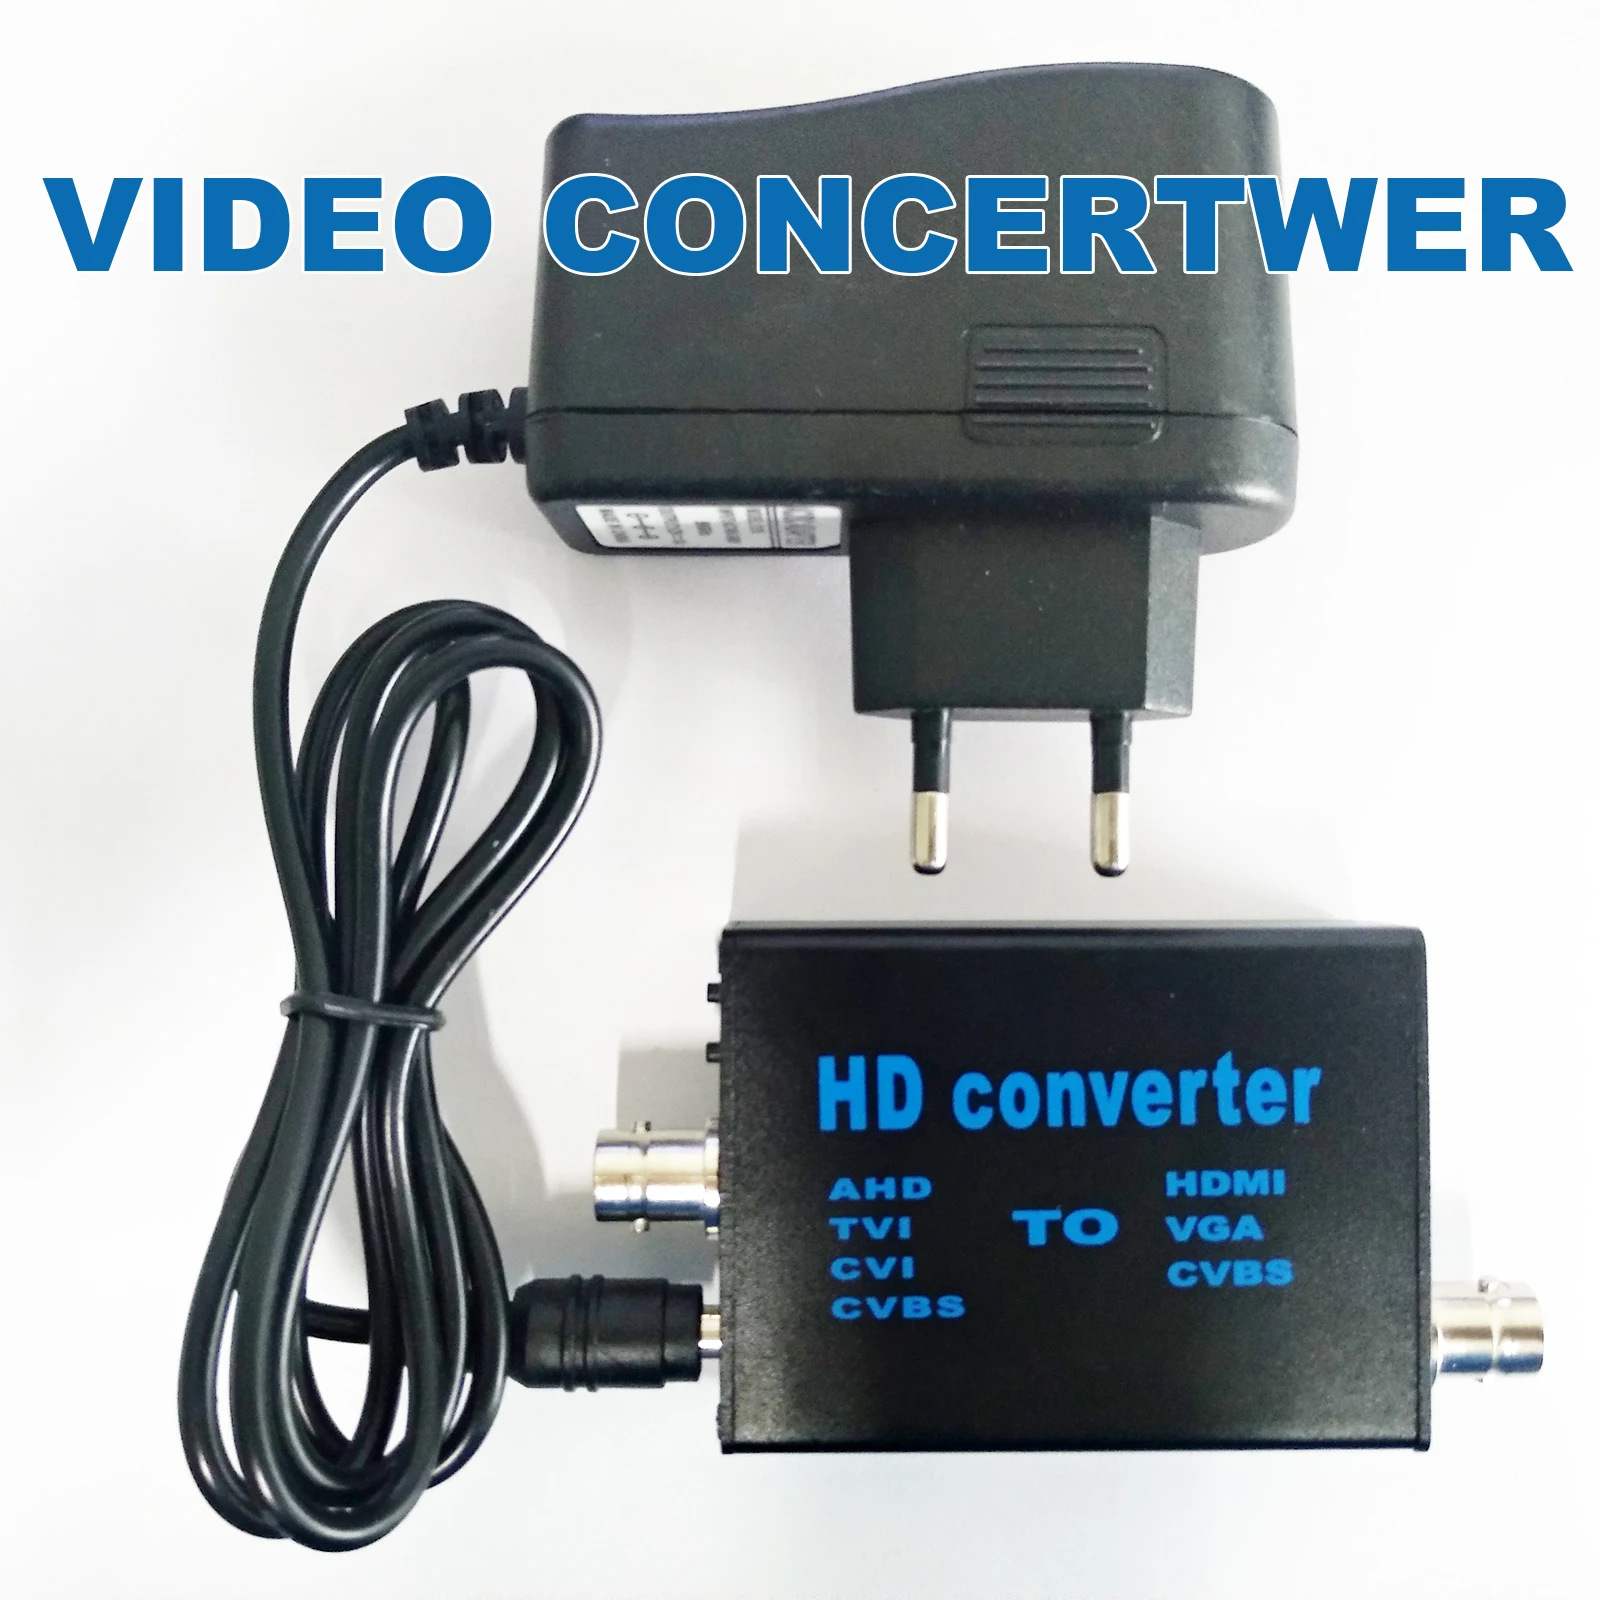 Converter AHD to HDMI HD video monitor AHD TVI CVI  CVBS to HDMI VGA CVBS  4-in-1 converter